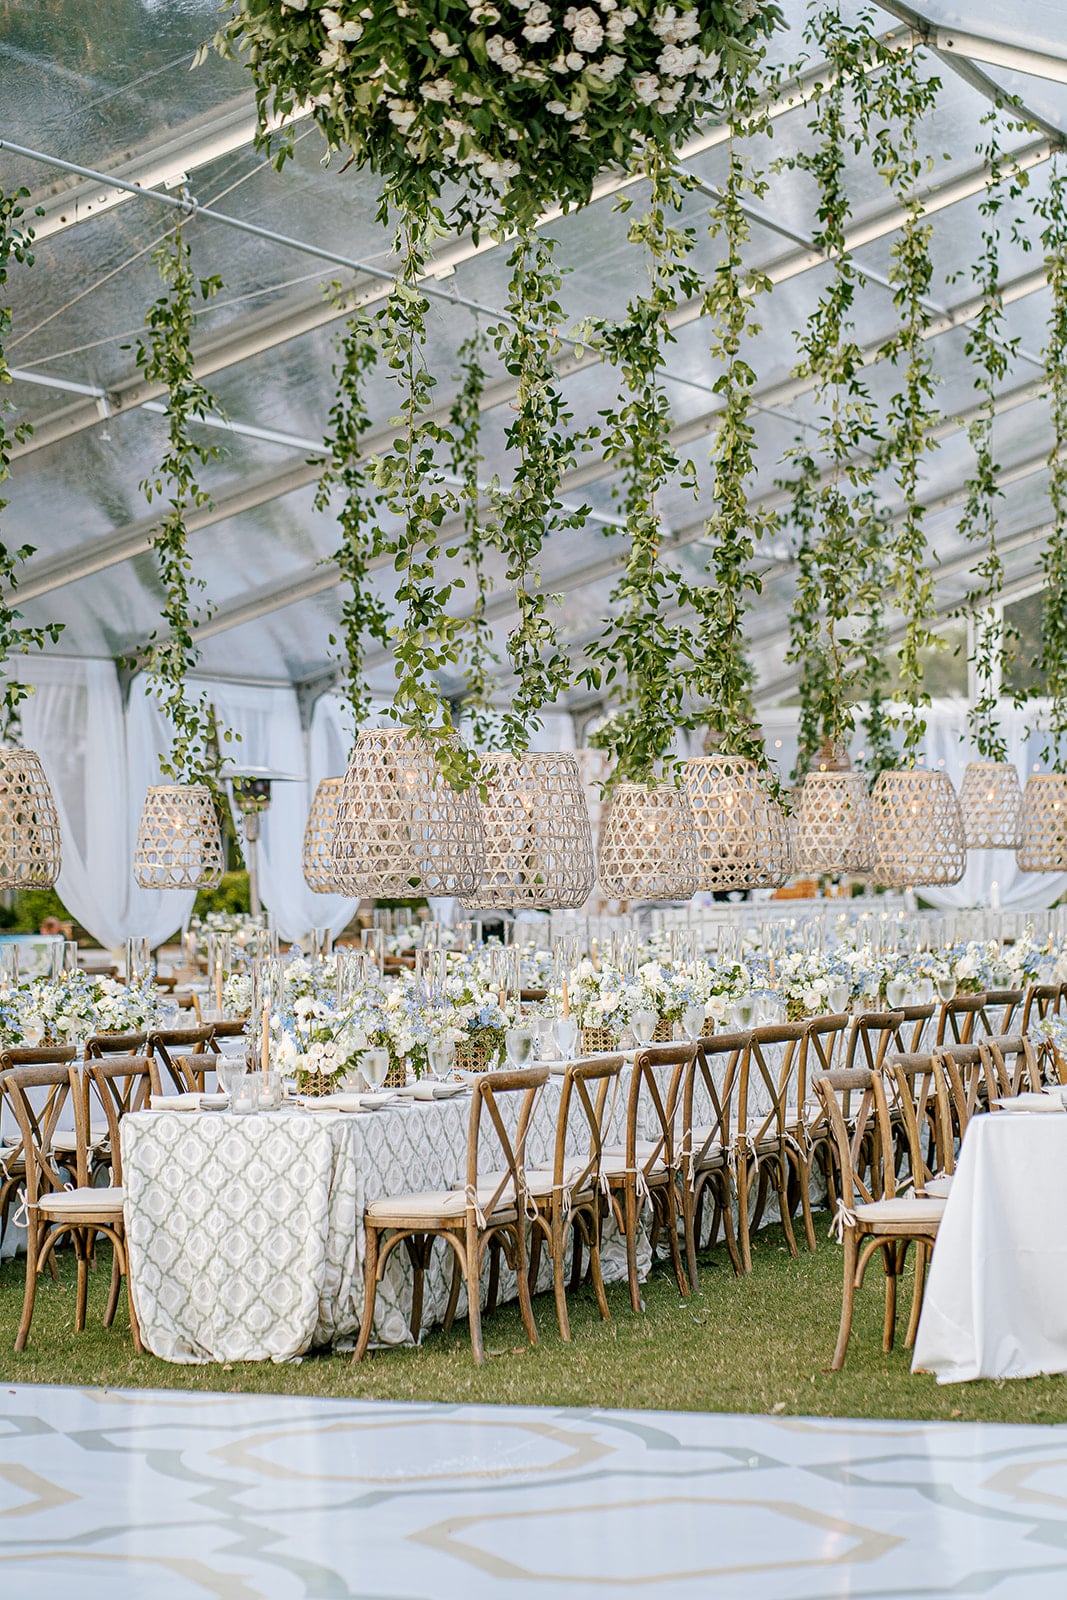 Luxury tented wedding reception decor